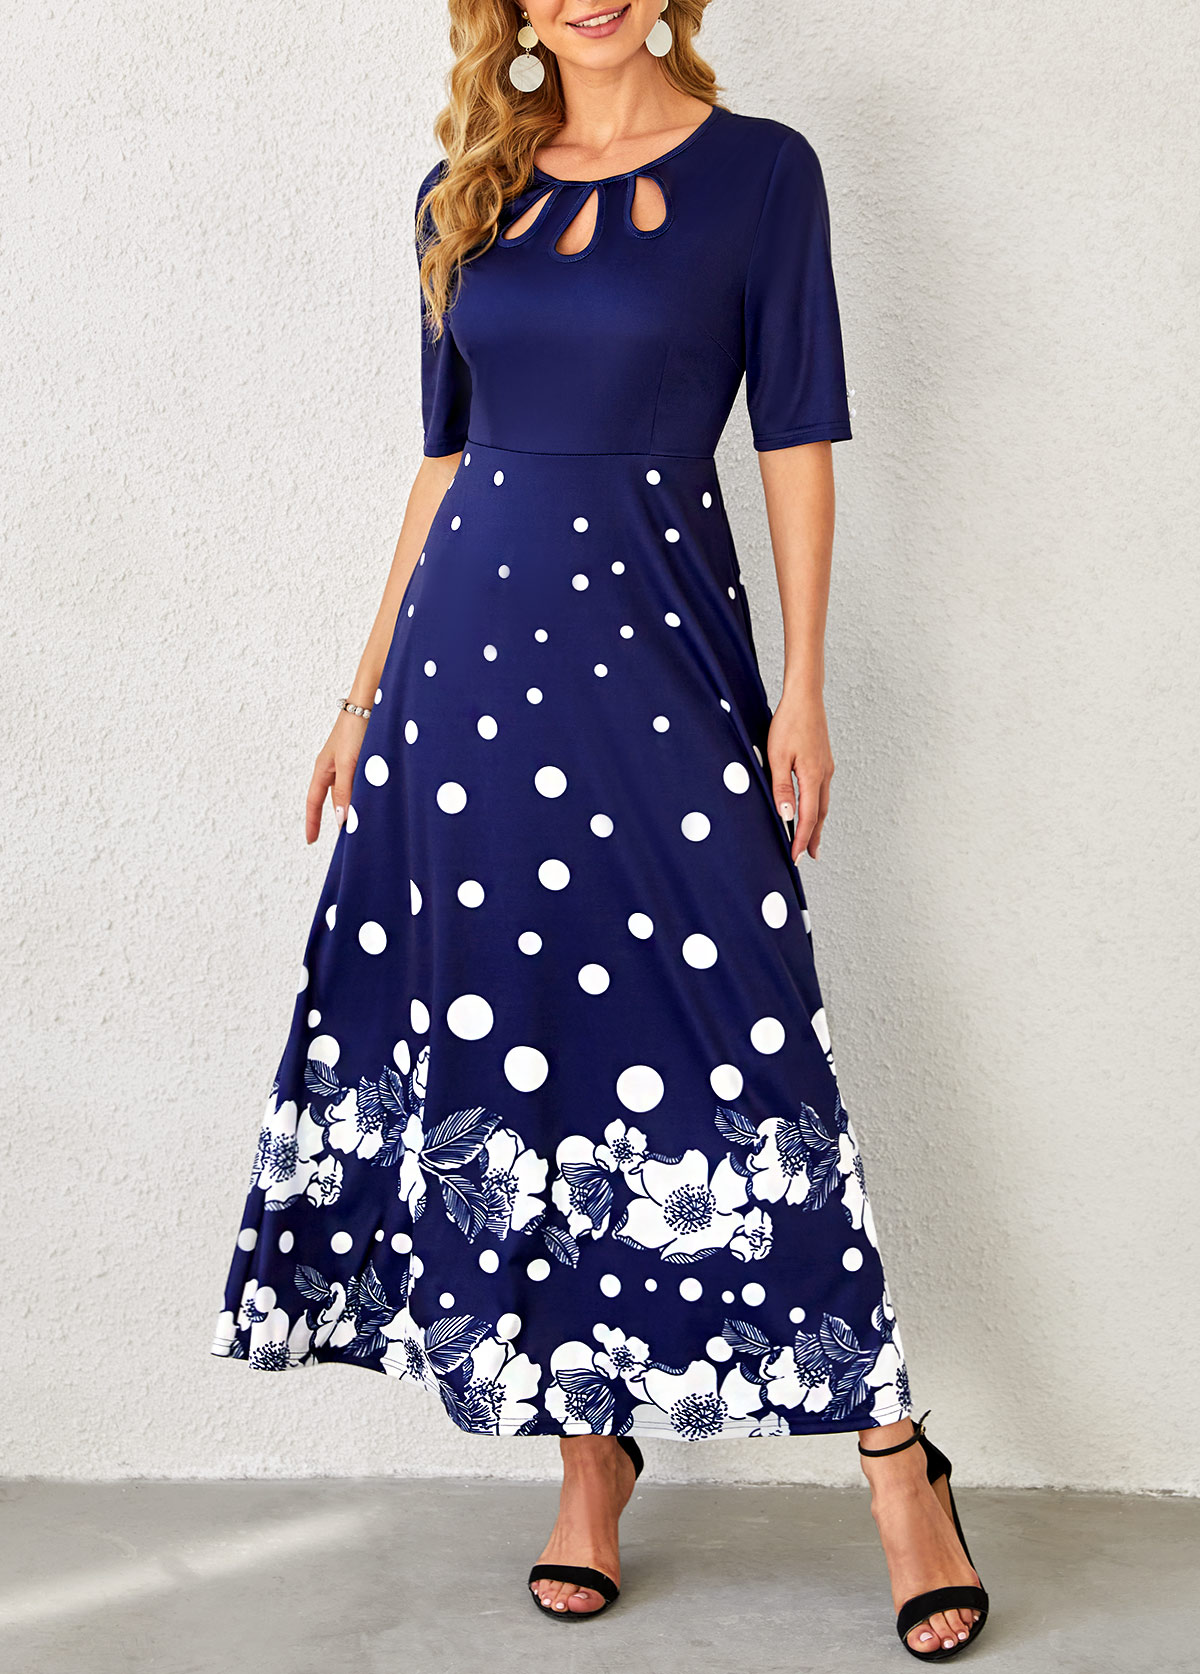 Polka Dot Floral Print Navy Blue Dress